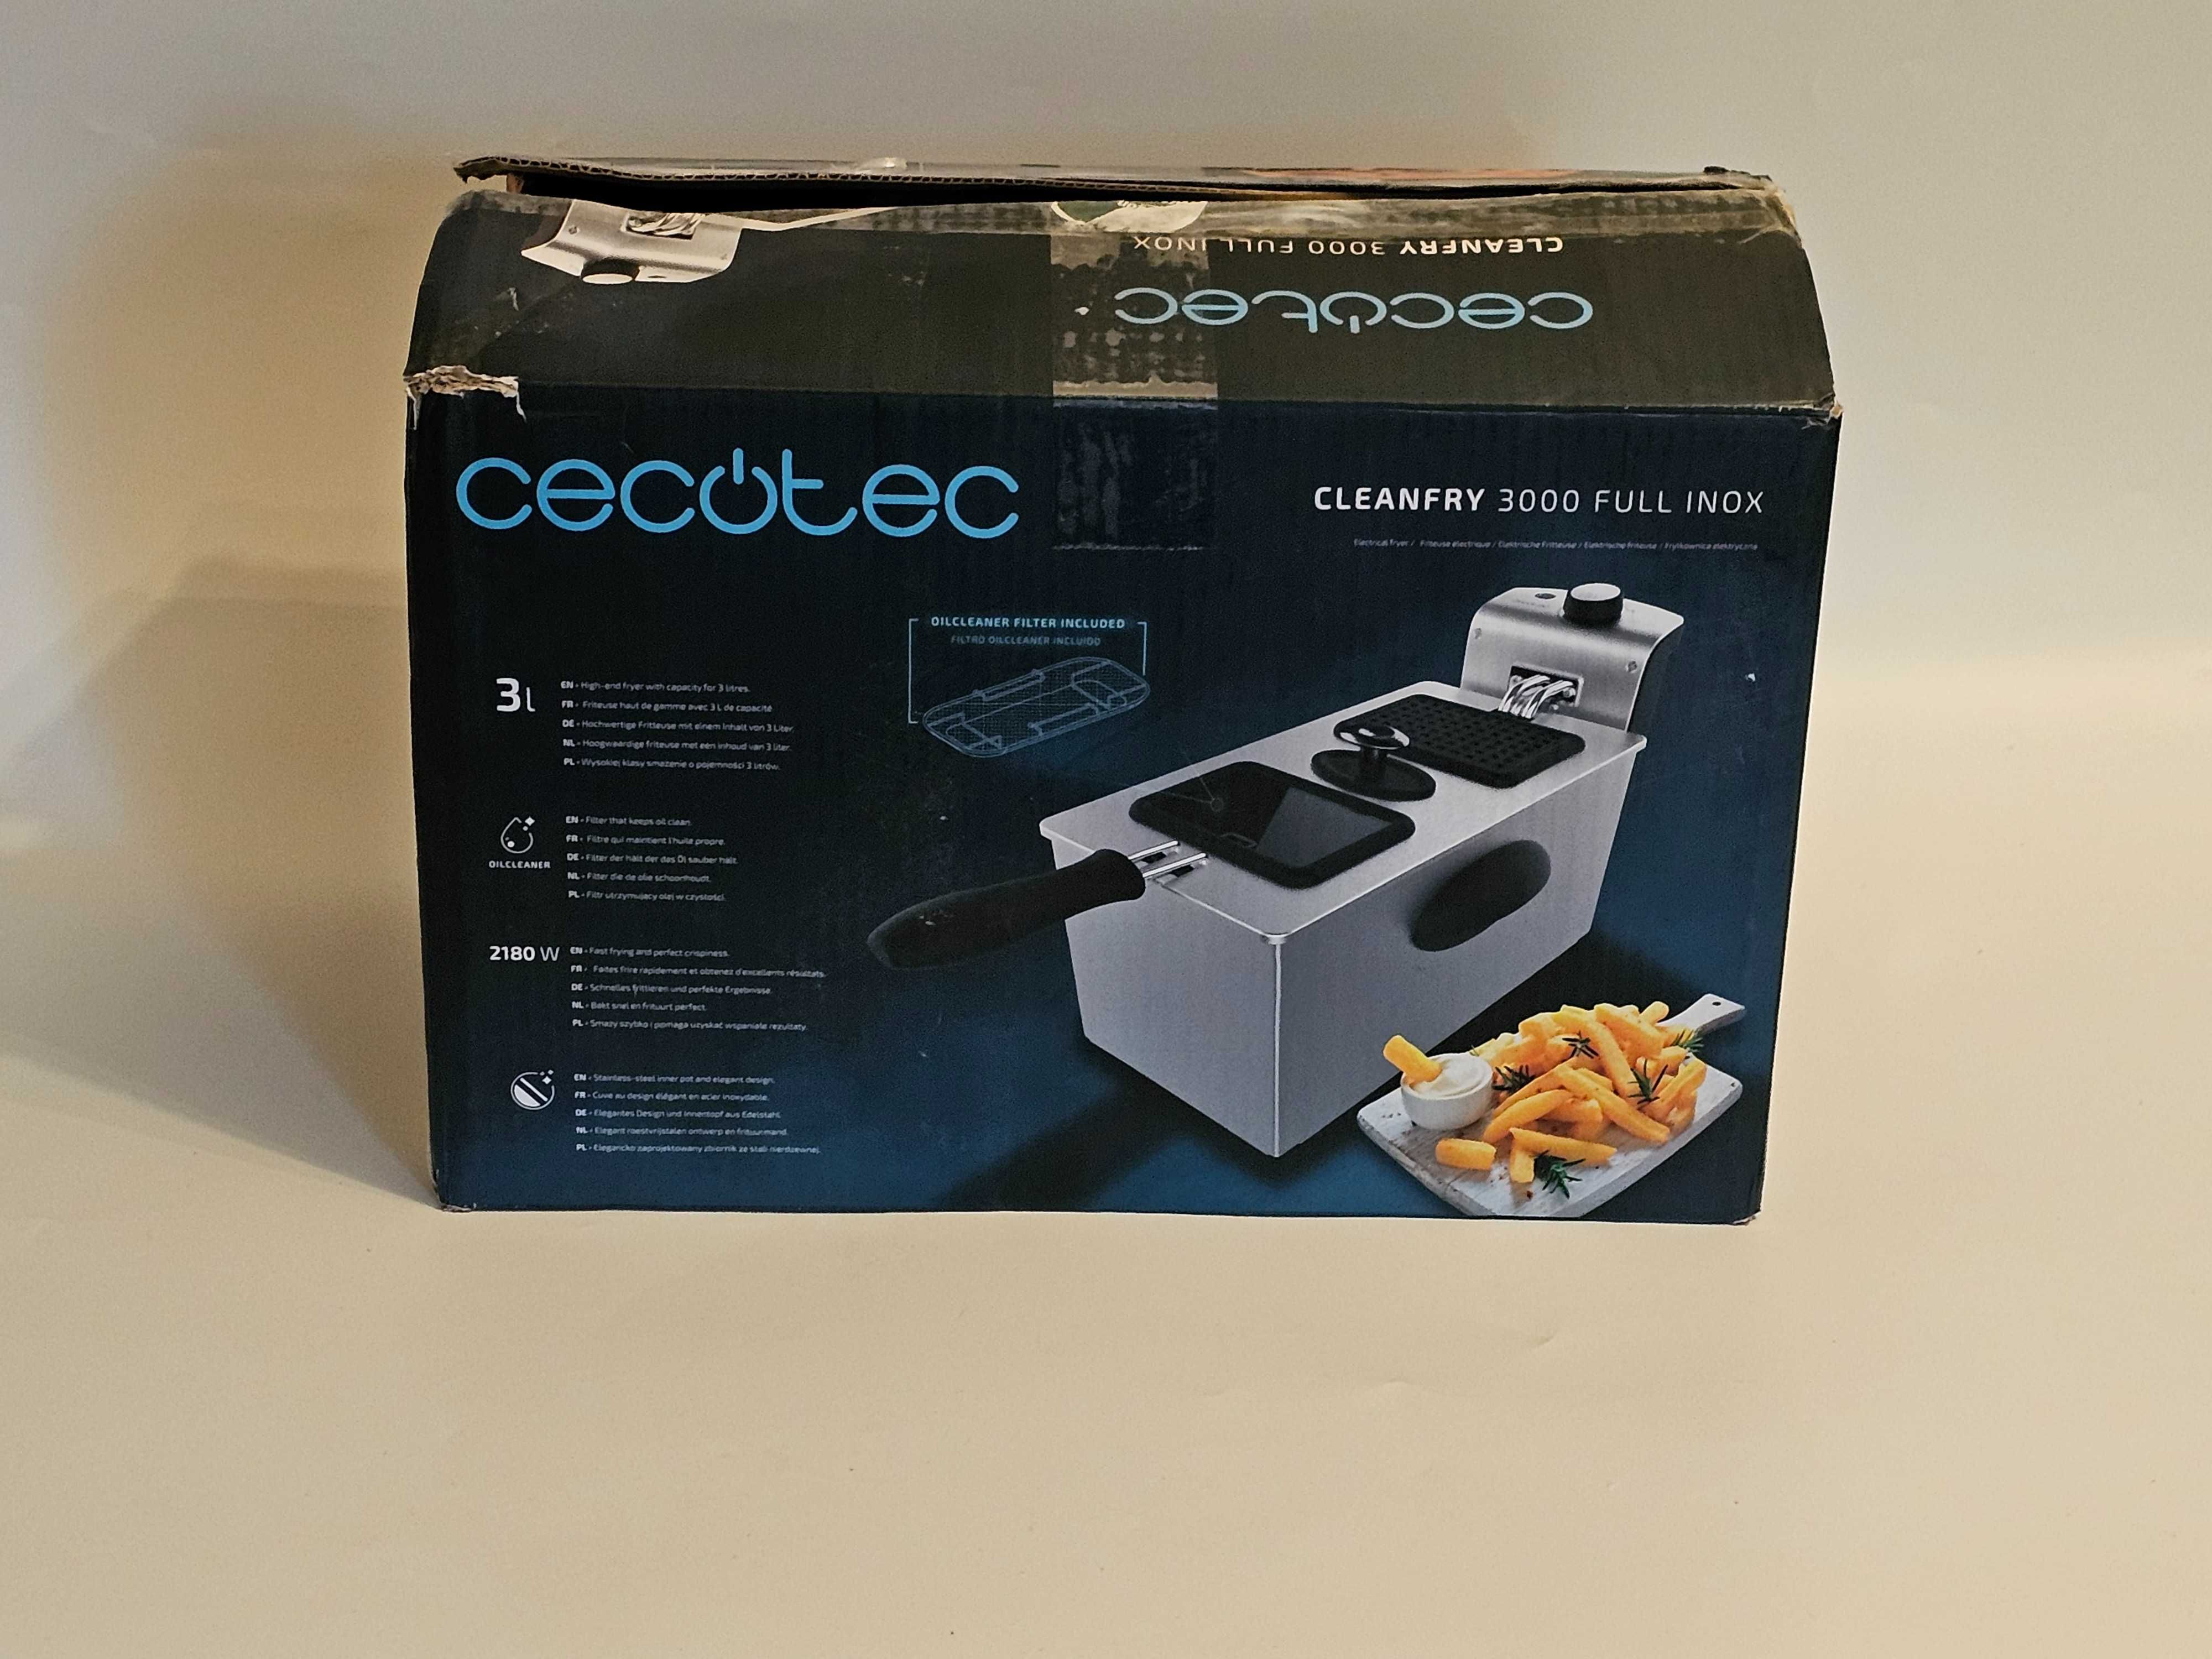 Cecotec CleanFry 3000 Full Inox Fryer/ 2180W/ Capacity 3L